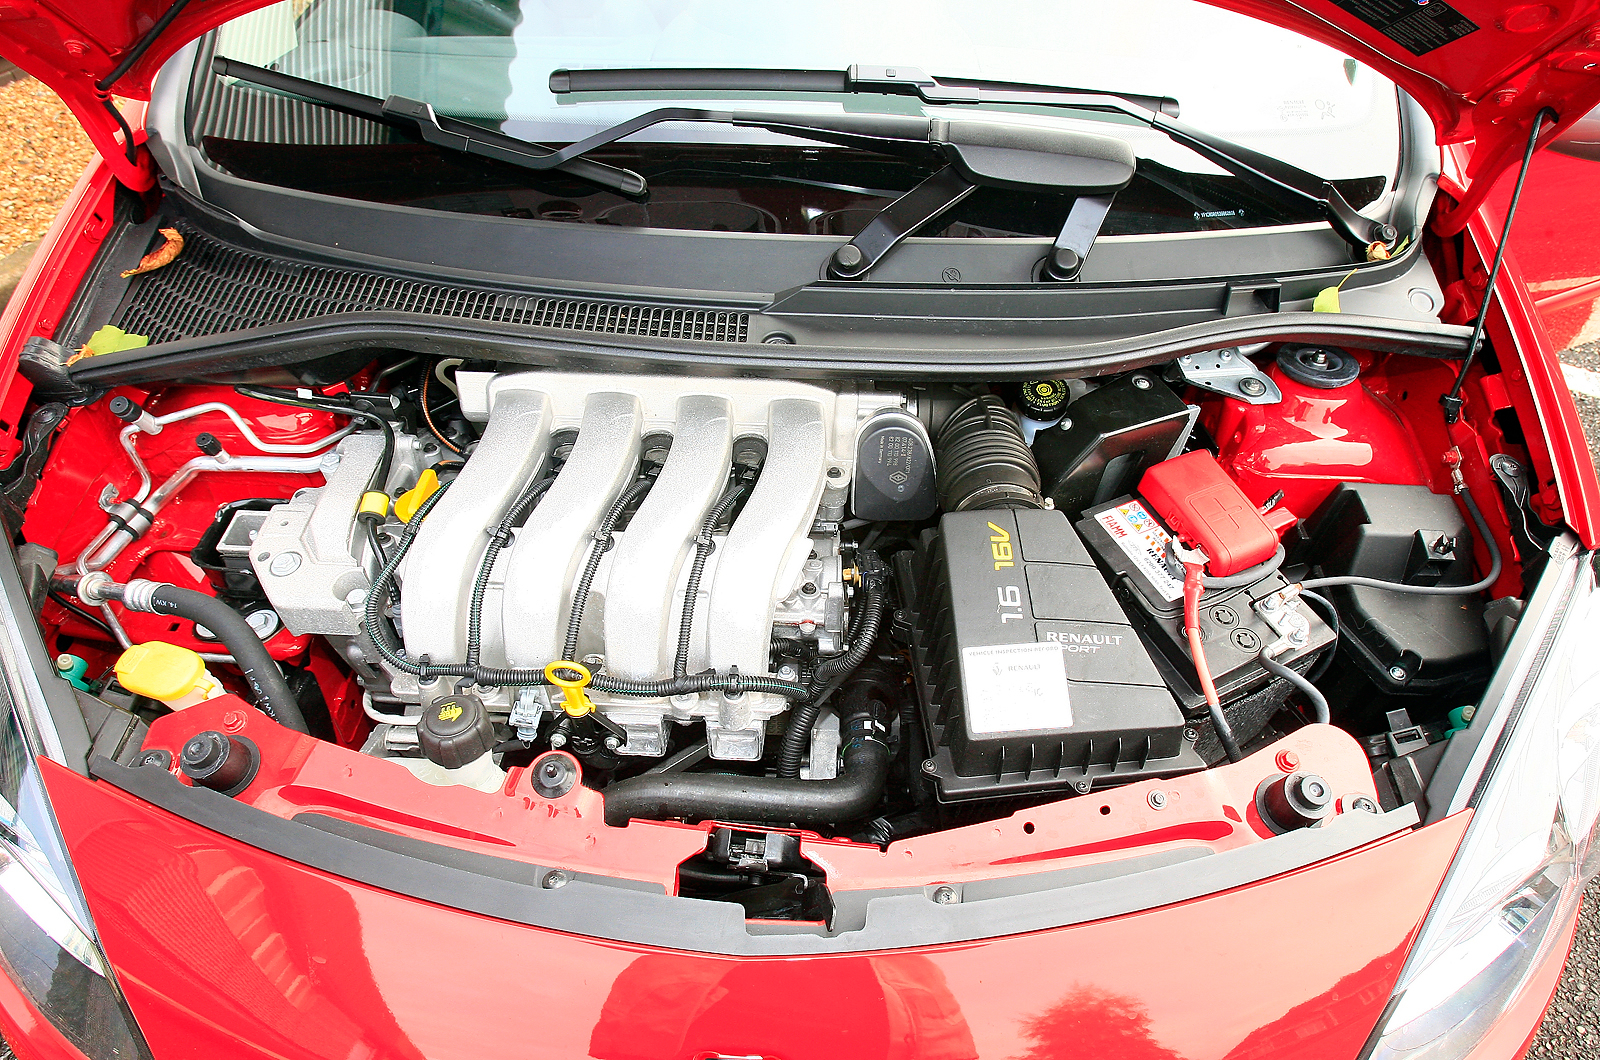 1.6-litre Renault Twingo Renaultsport engine